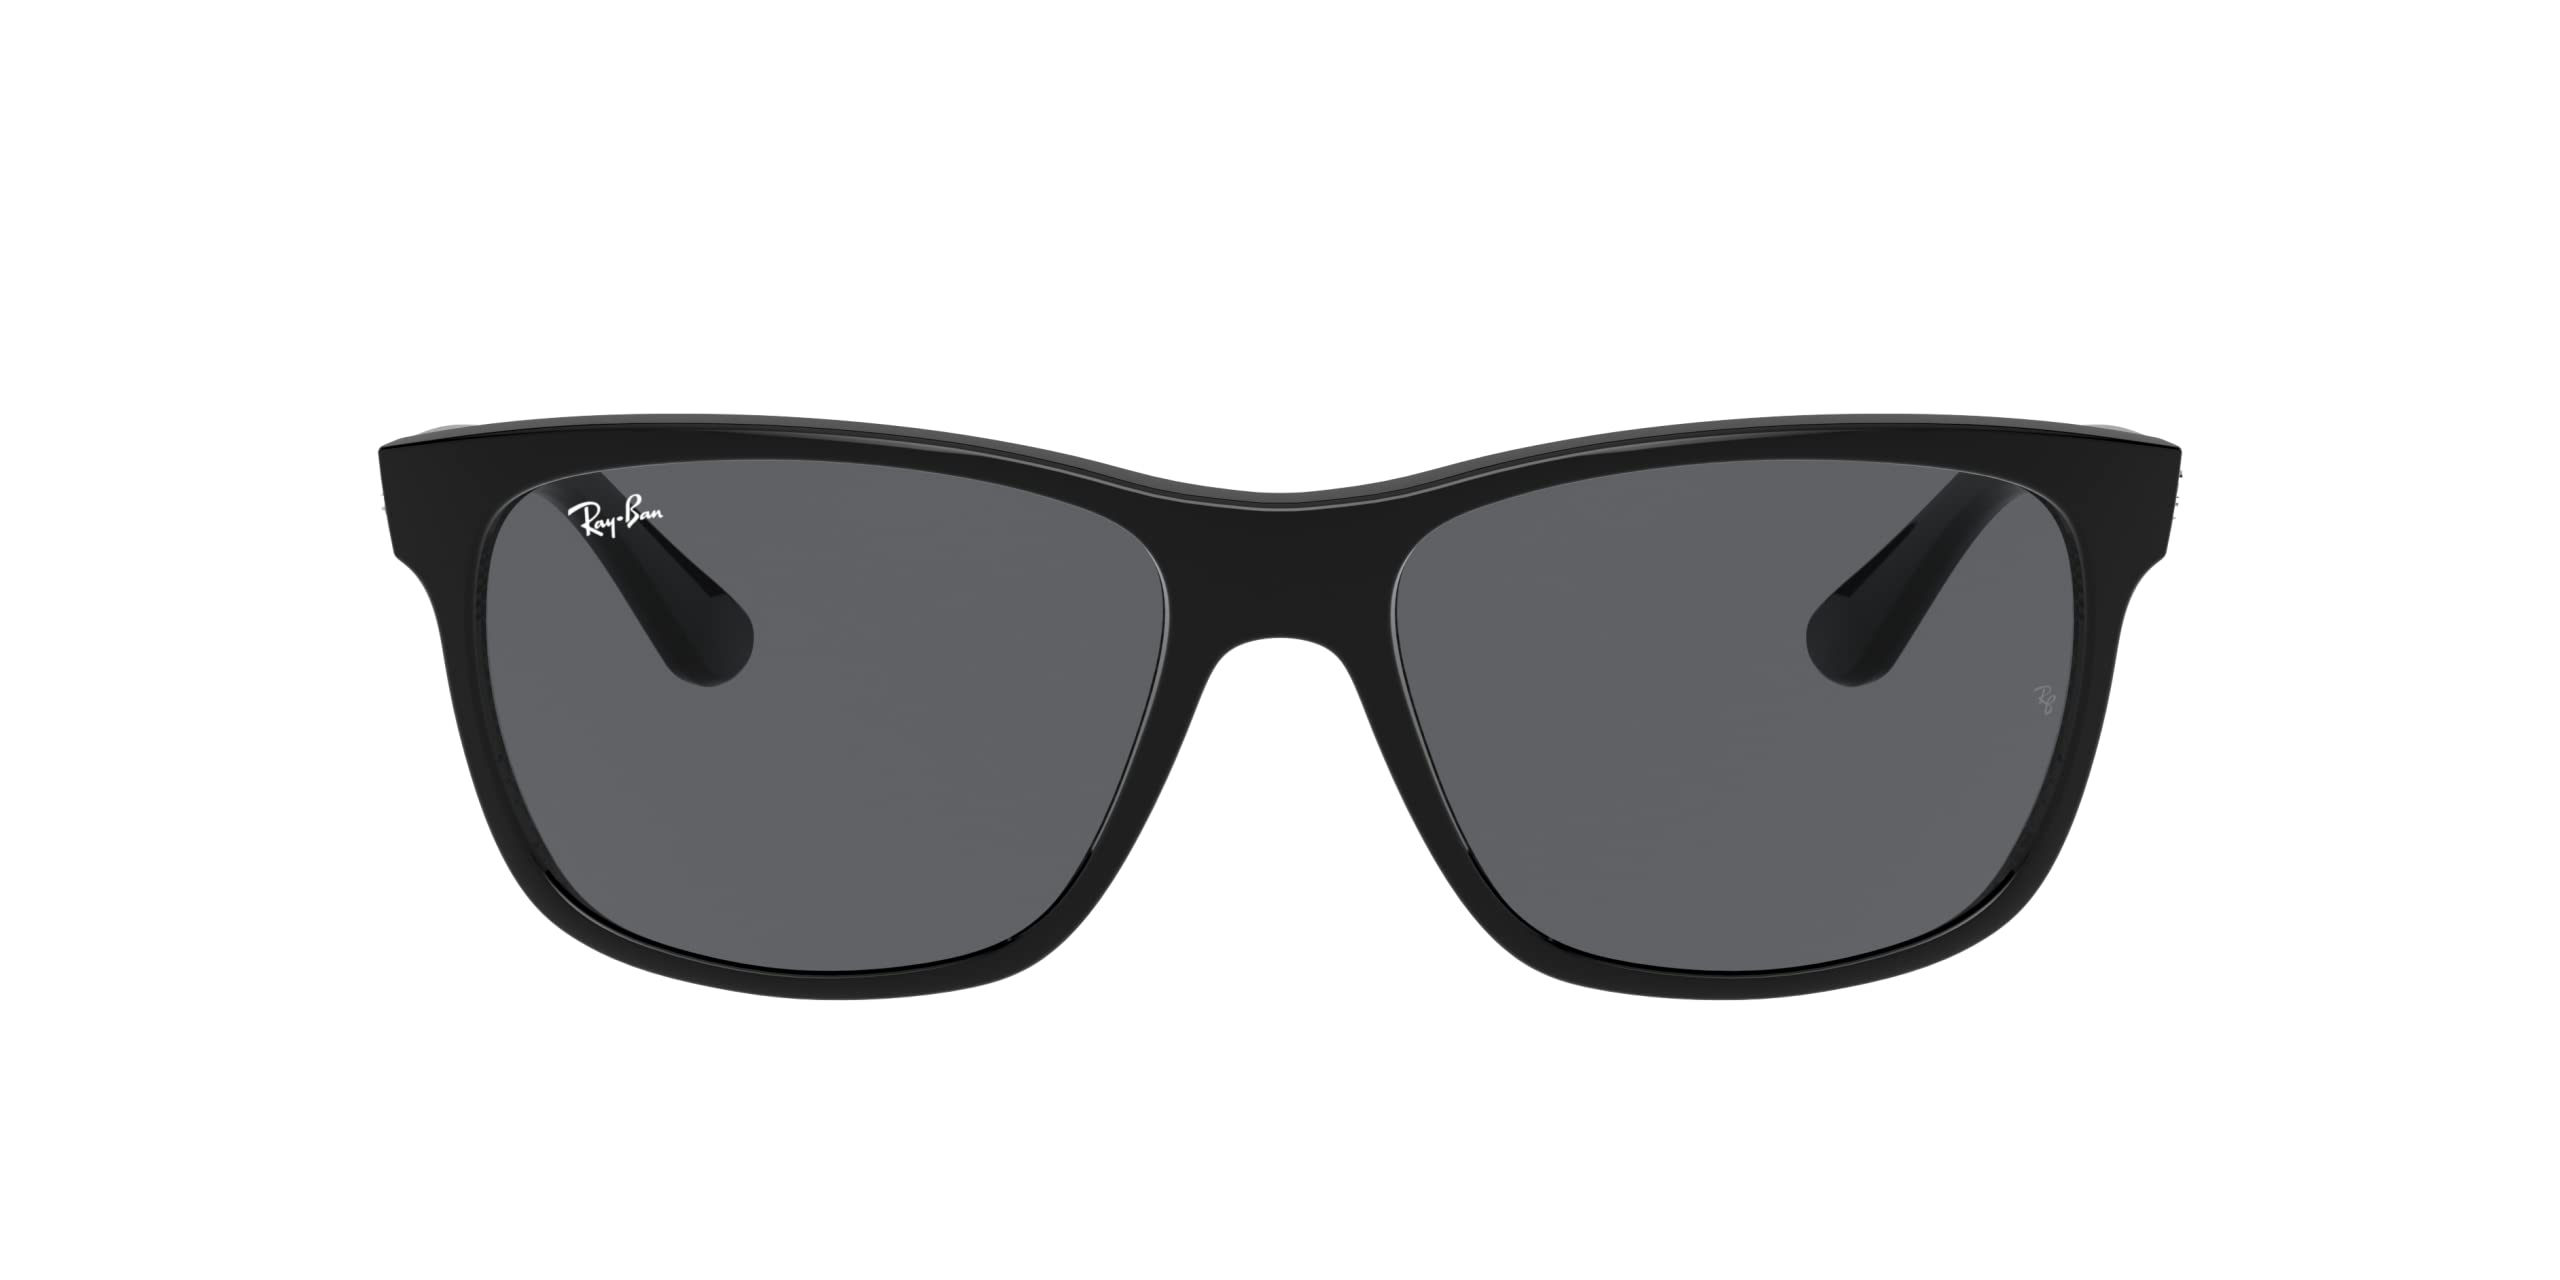 Ray-Ban Men's RB4181 Square Sunglasses, Black/Dark Grey, 57 mm